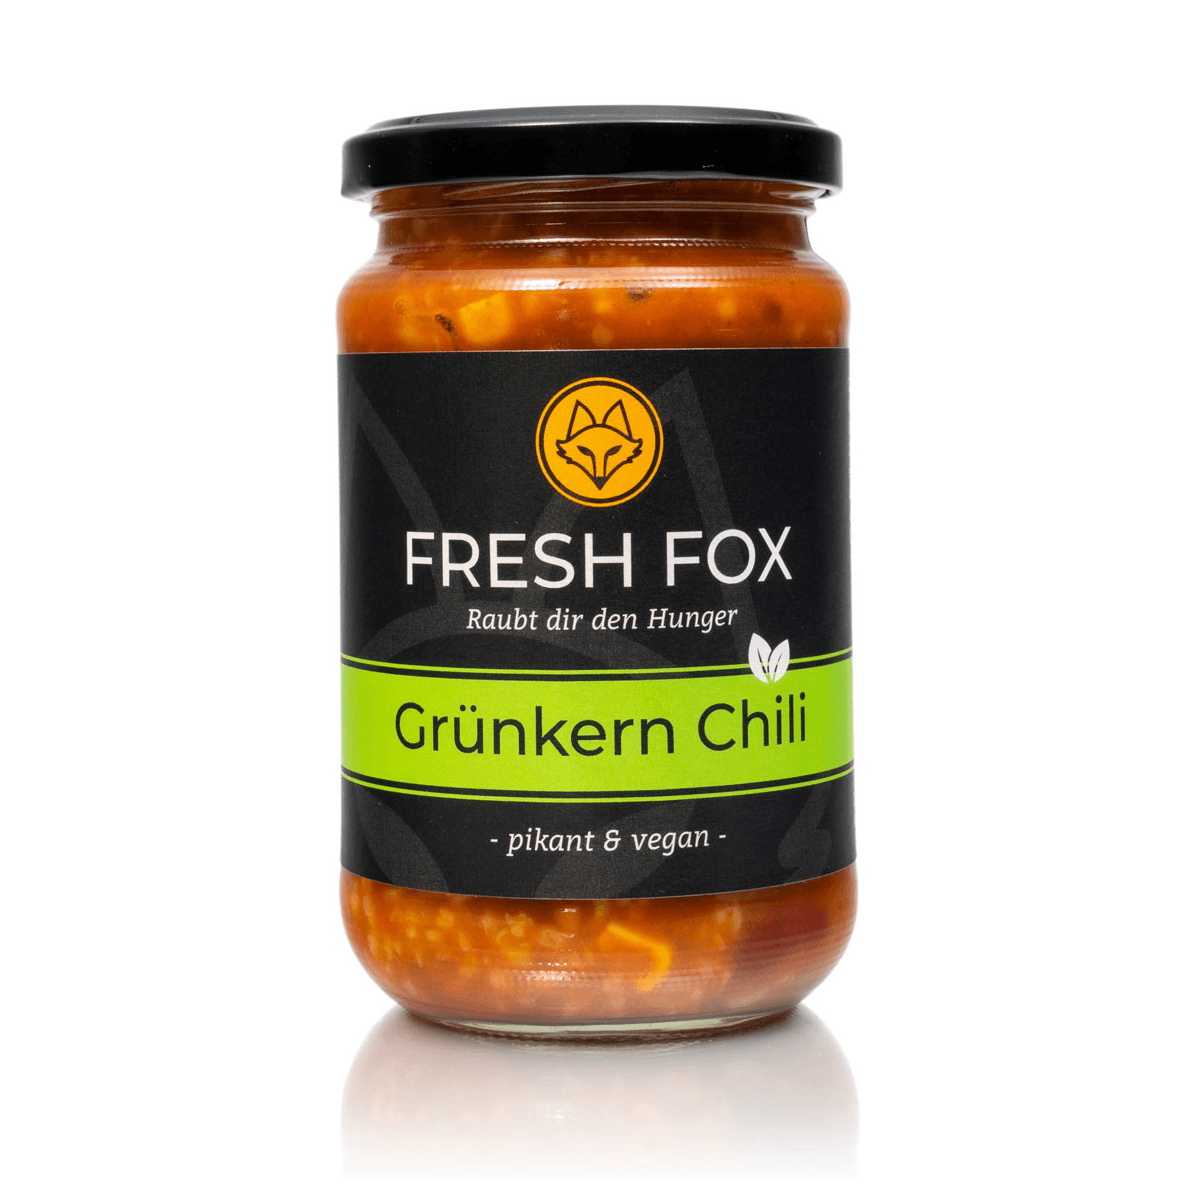 Scharfsinniges Grünkern Chili - pikant & vegan - Fresh Fox 350ml